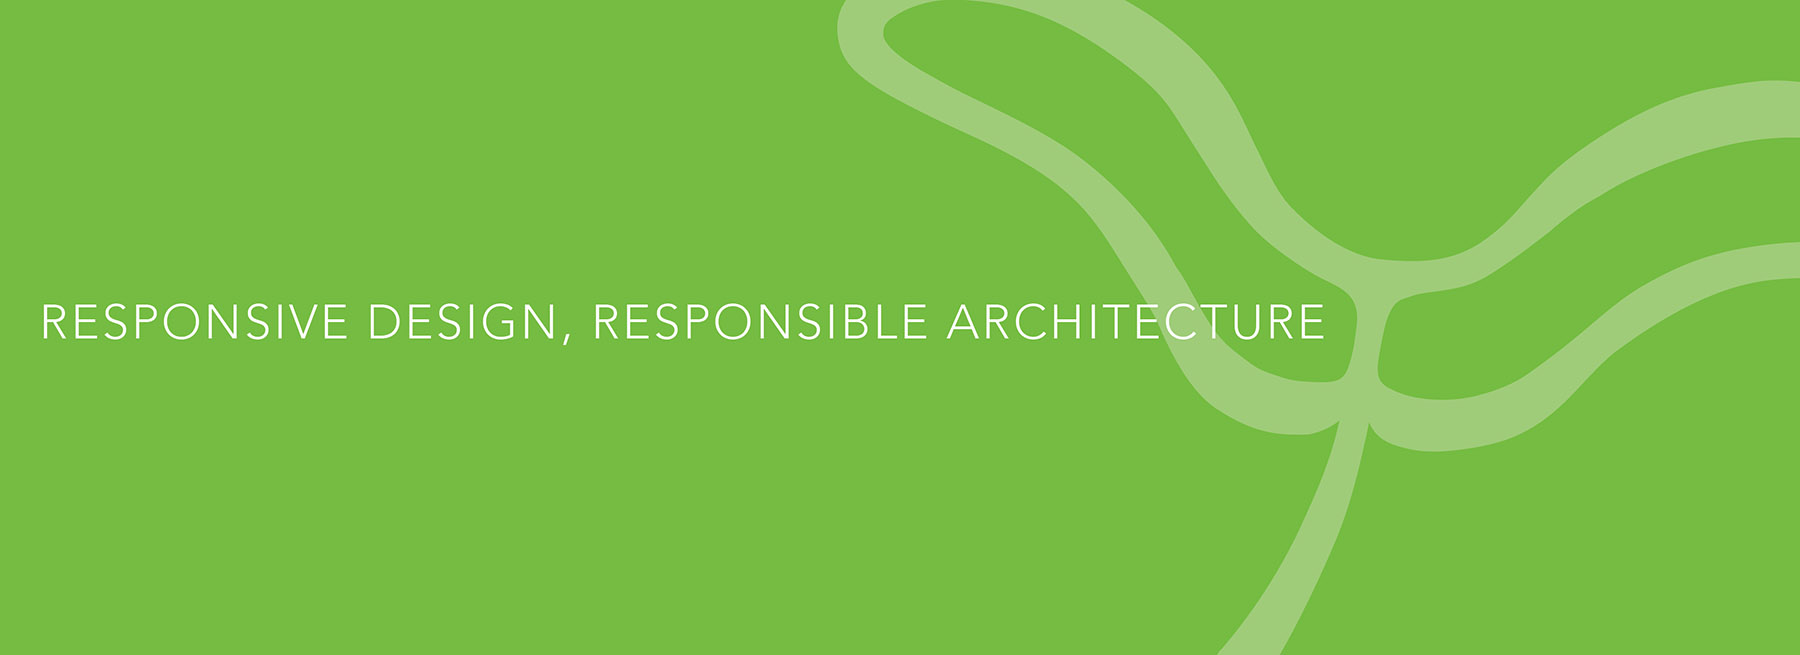 Green Propeller, Responsive Design, Responsible Architecture